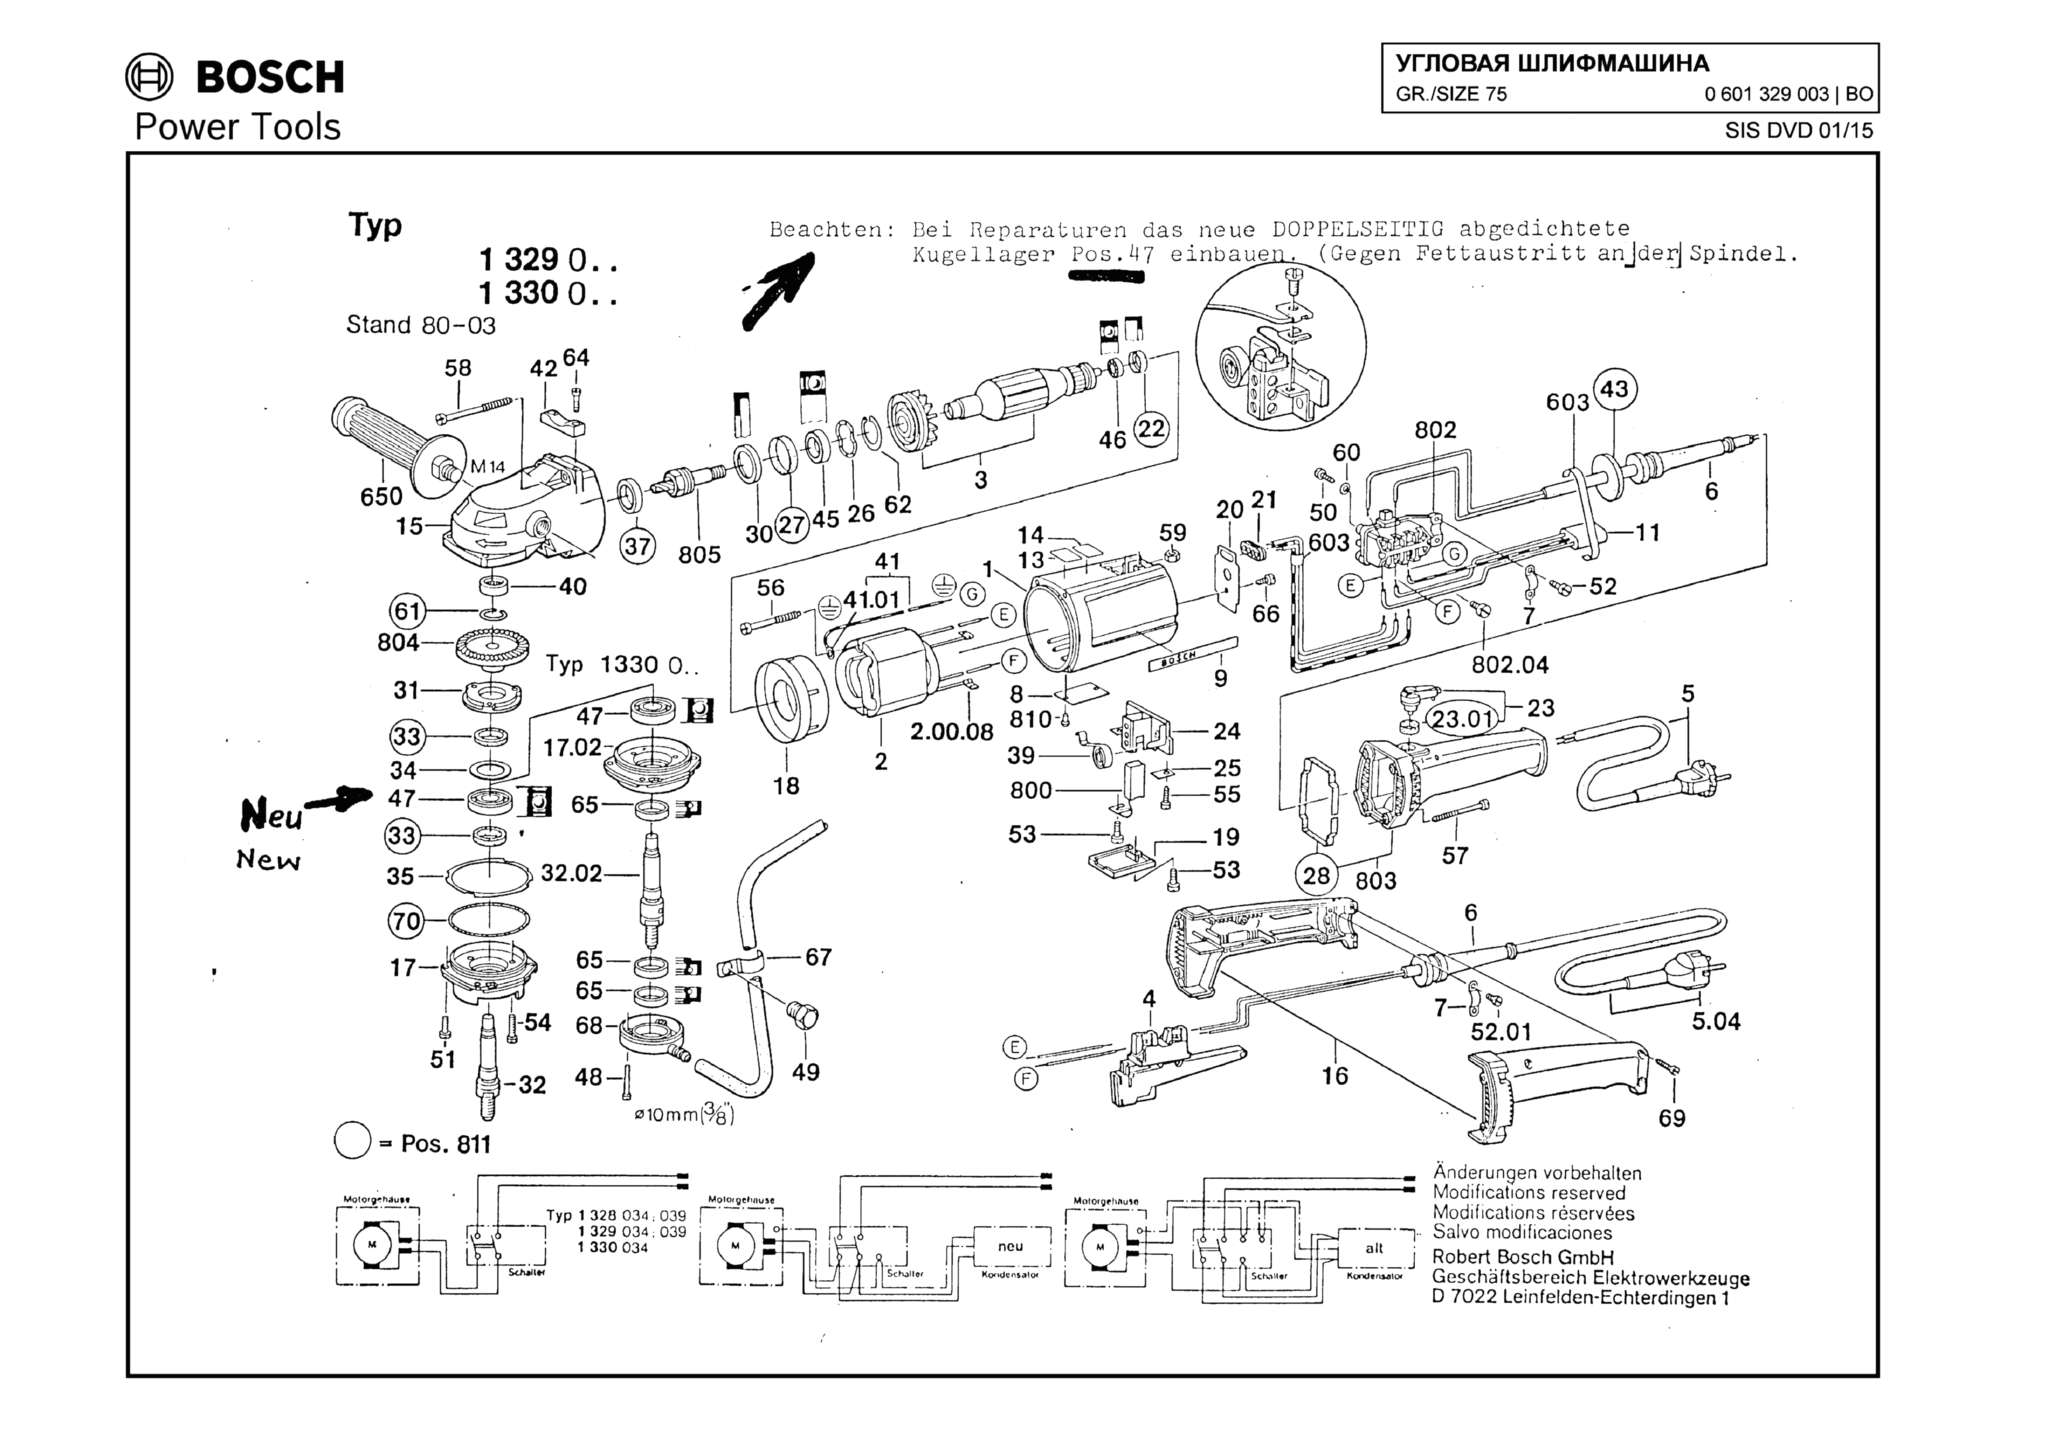 Запчасти, схема и деталировка Bosch GR./SIZE 75 (ТИП 0601329003)